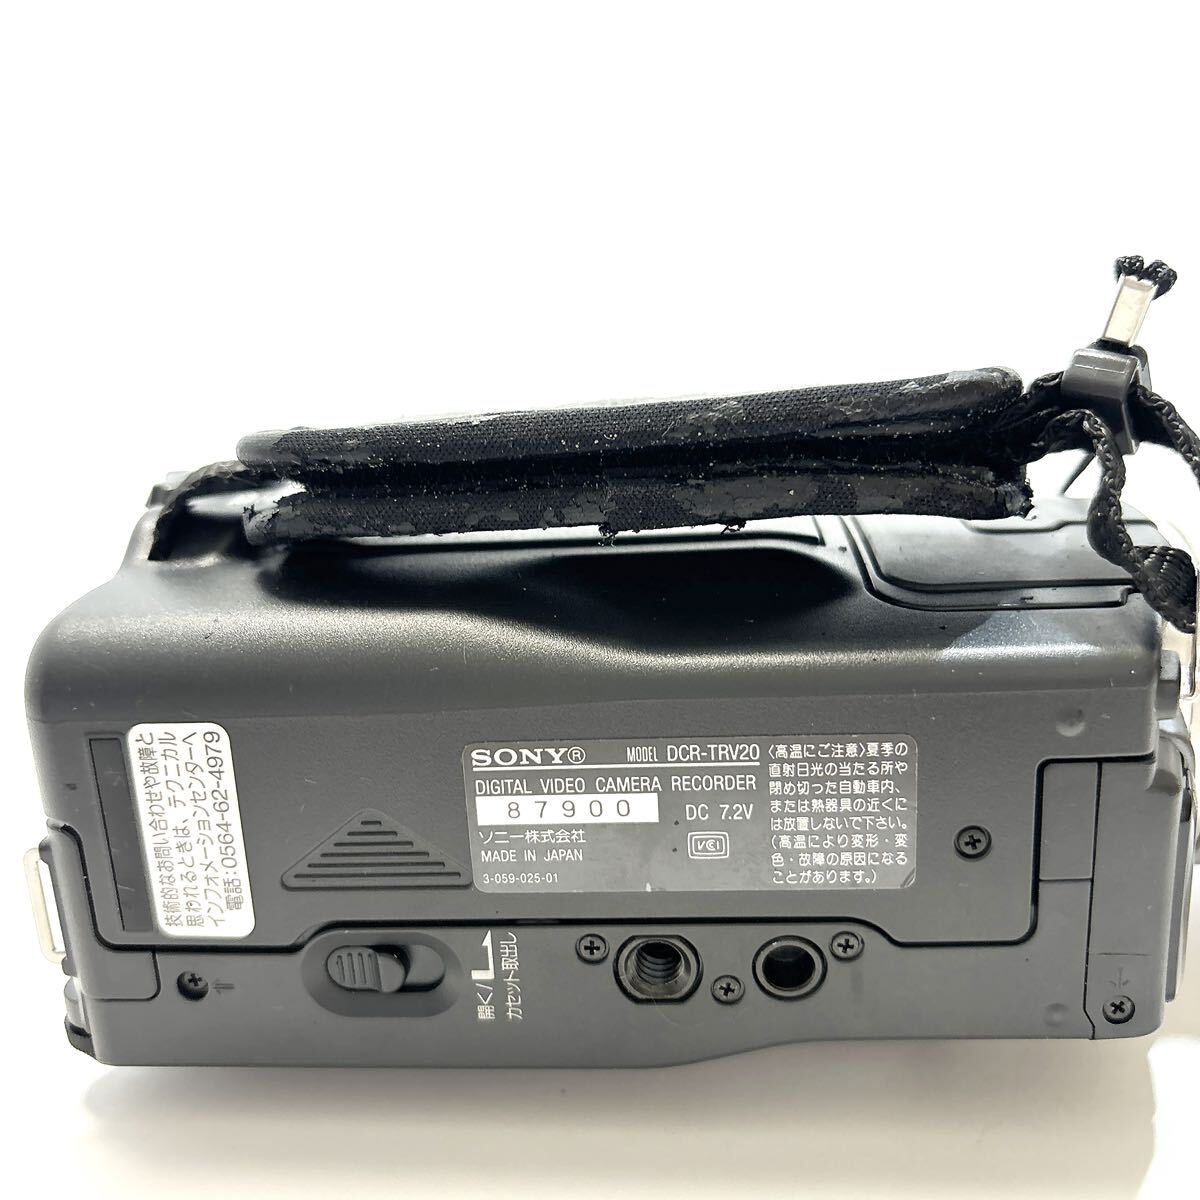 SONY Sony Handycam DCR-TRV20 цифровая видео камера Mini DV miniDV alp скала 0413